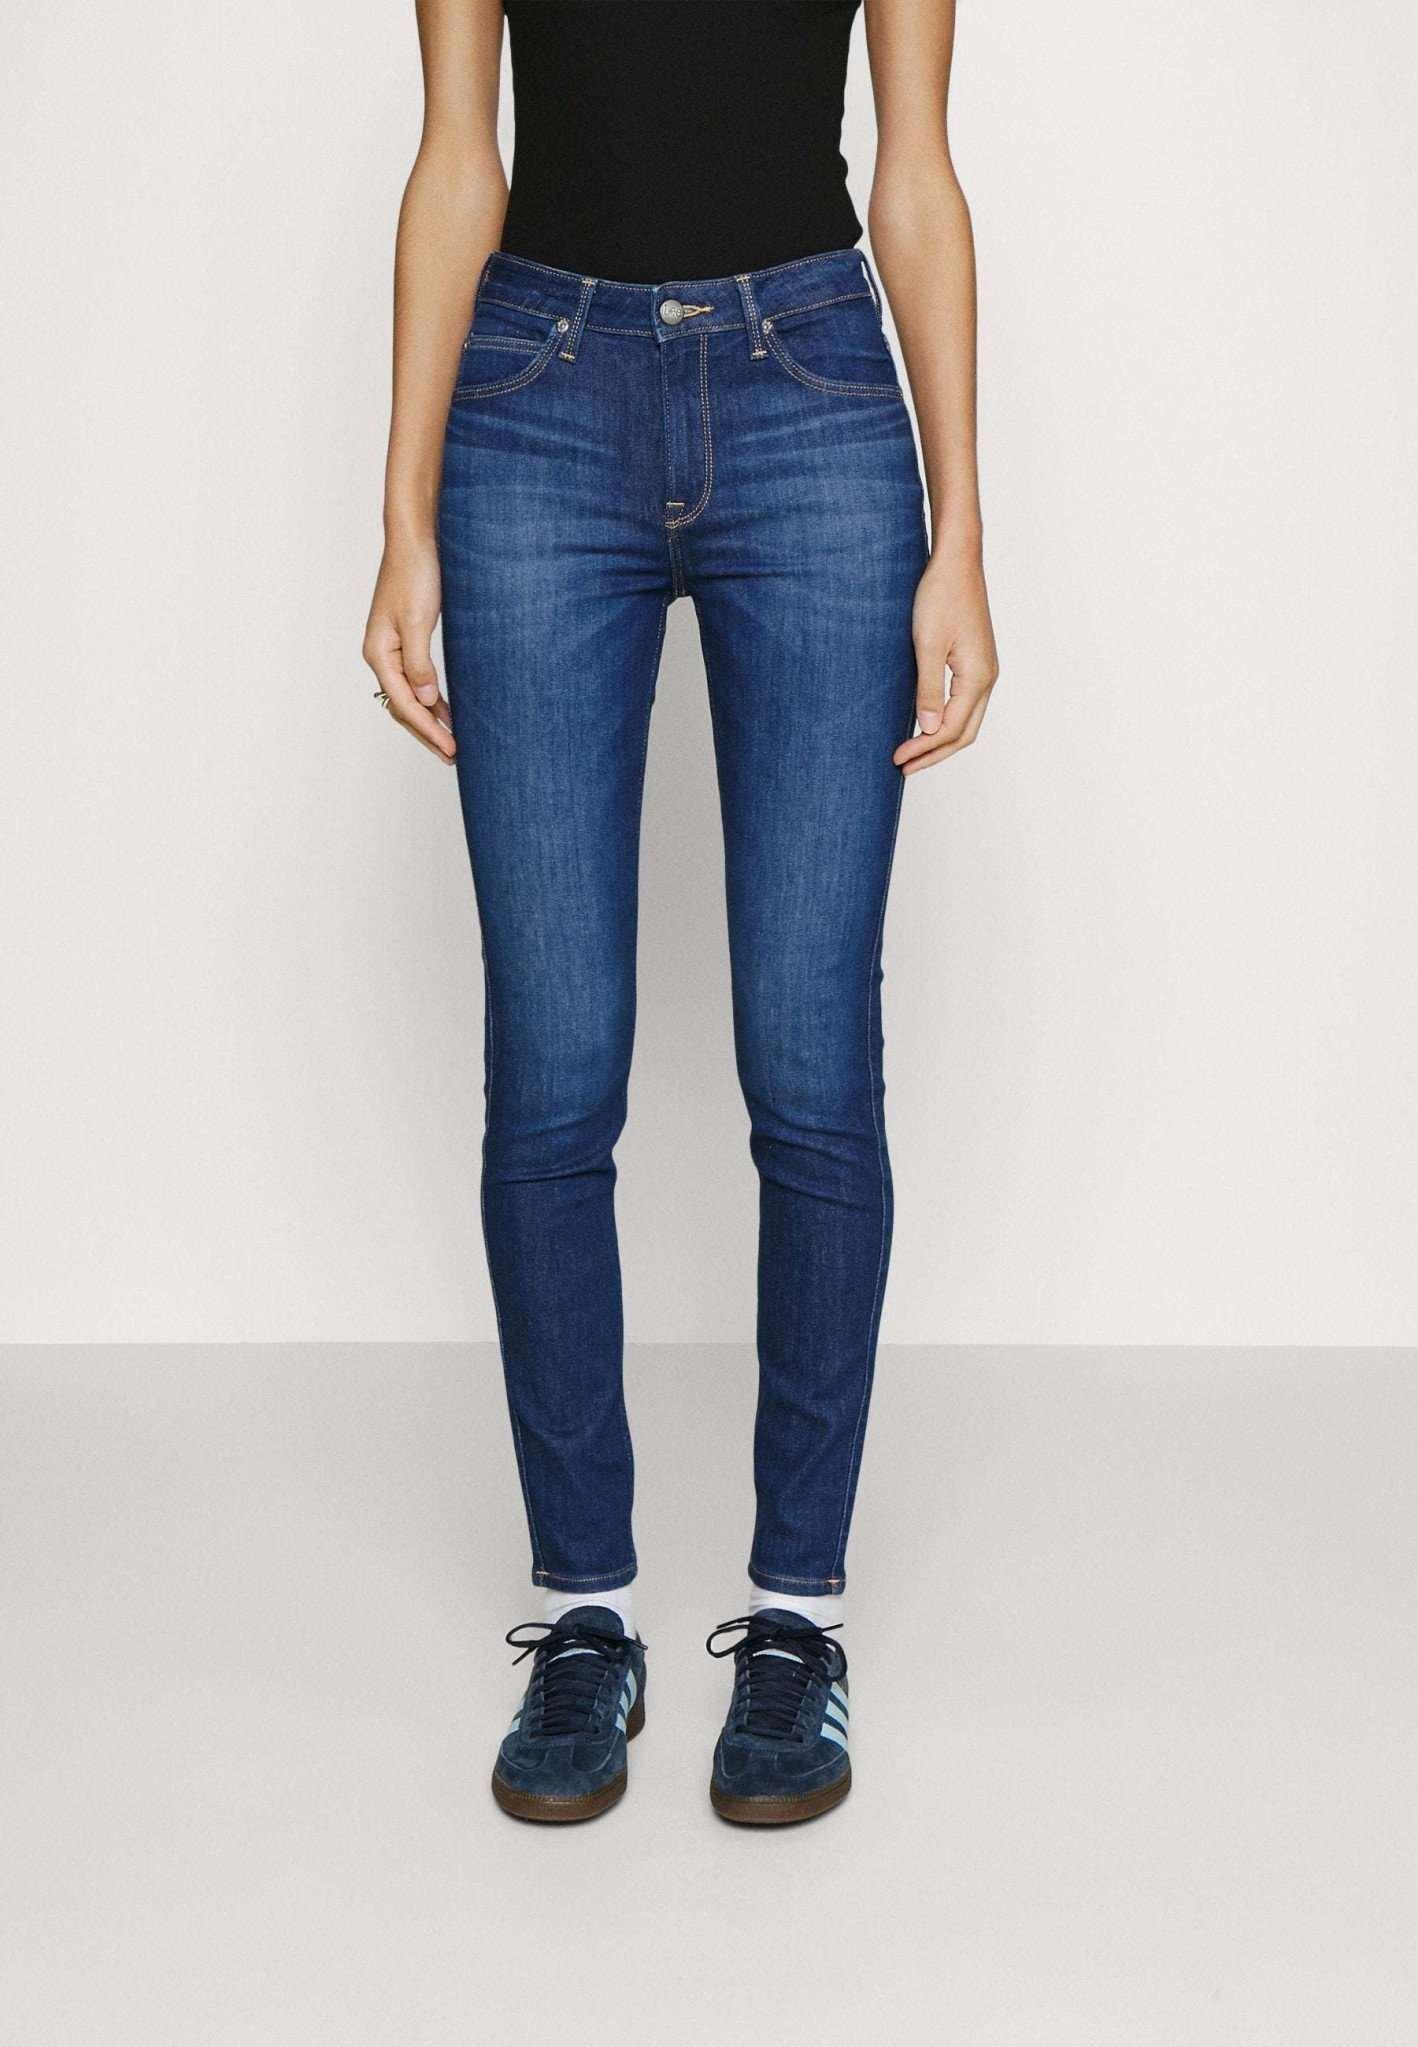 Jeans Skinny Fit Scarlett High Damen Blau L33/W25 von Lee